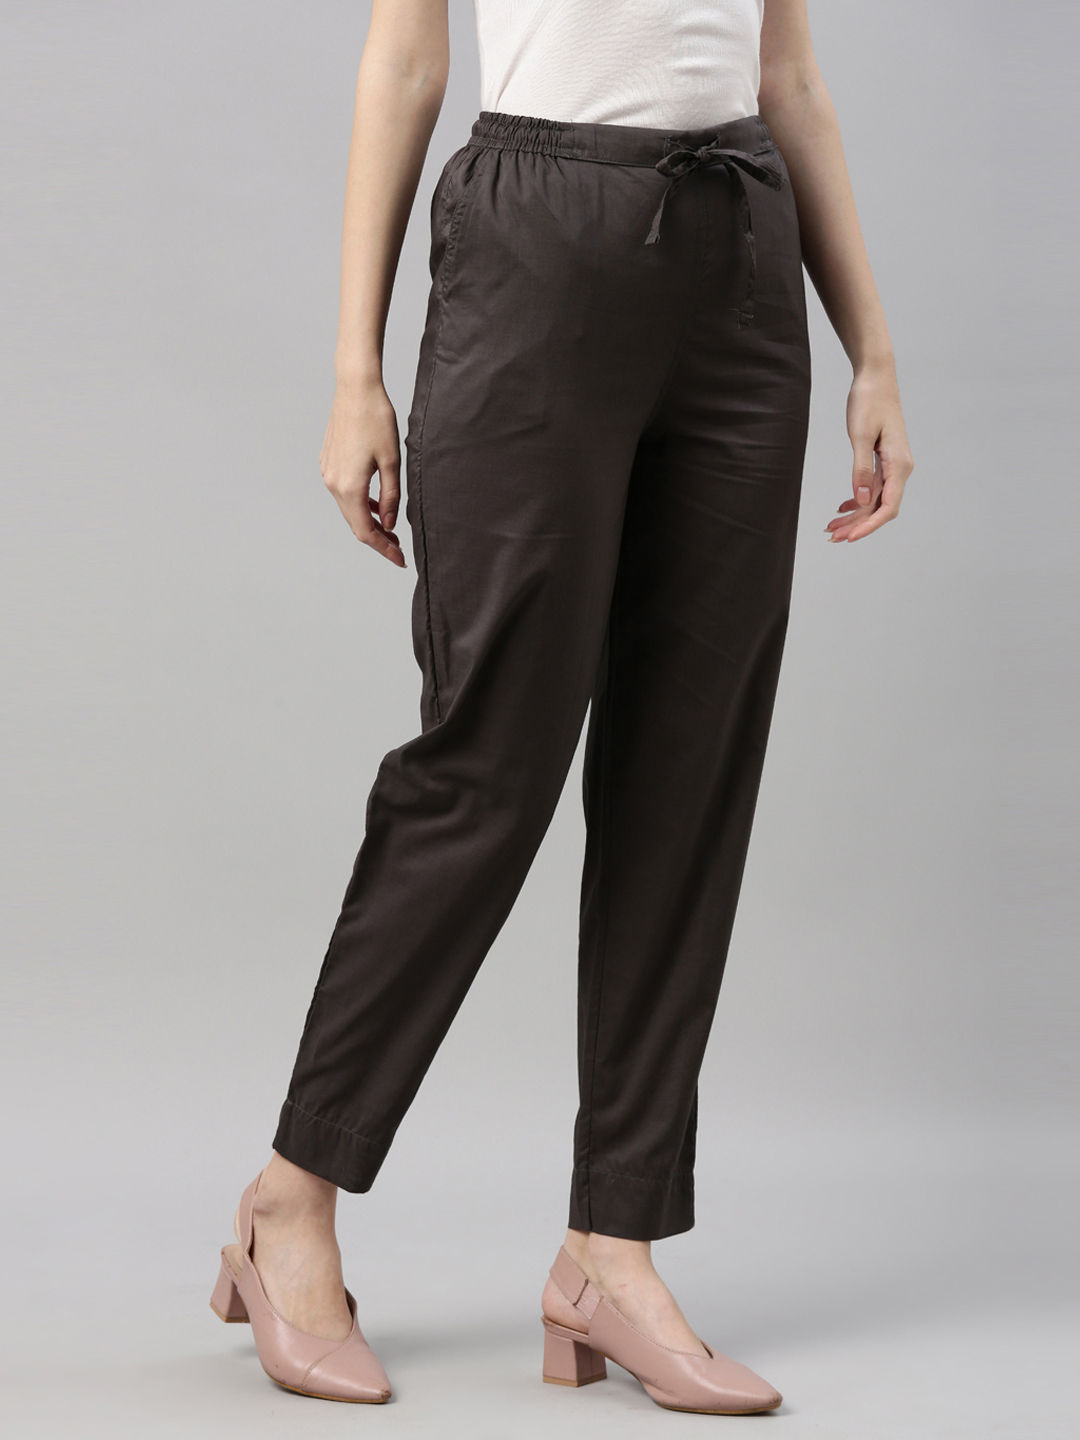 Gray Suspender Wool Pants Women 3153 – XiaoLizi